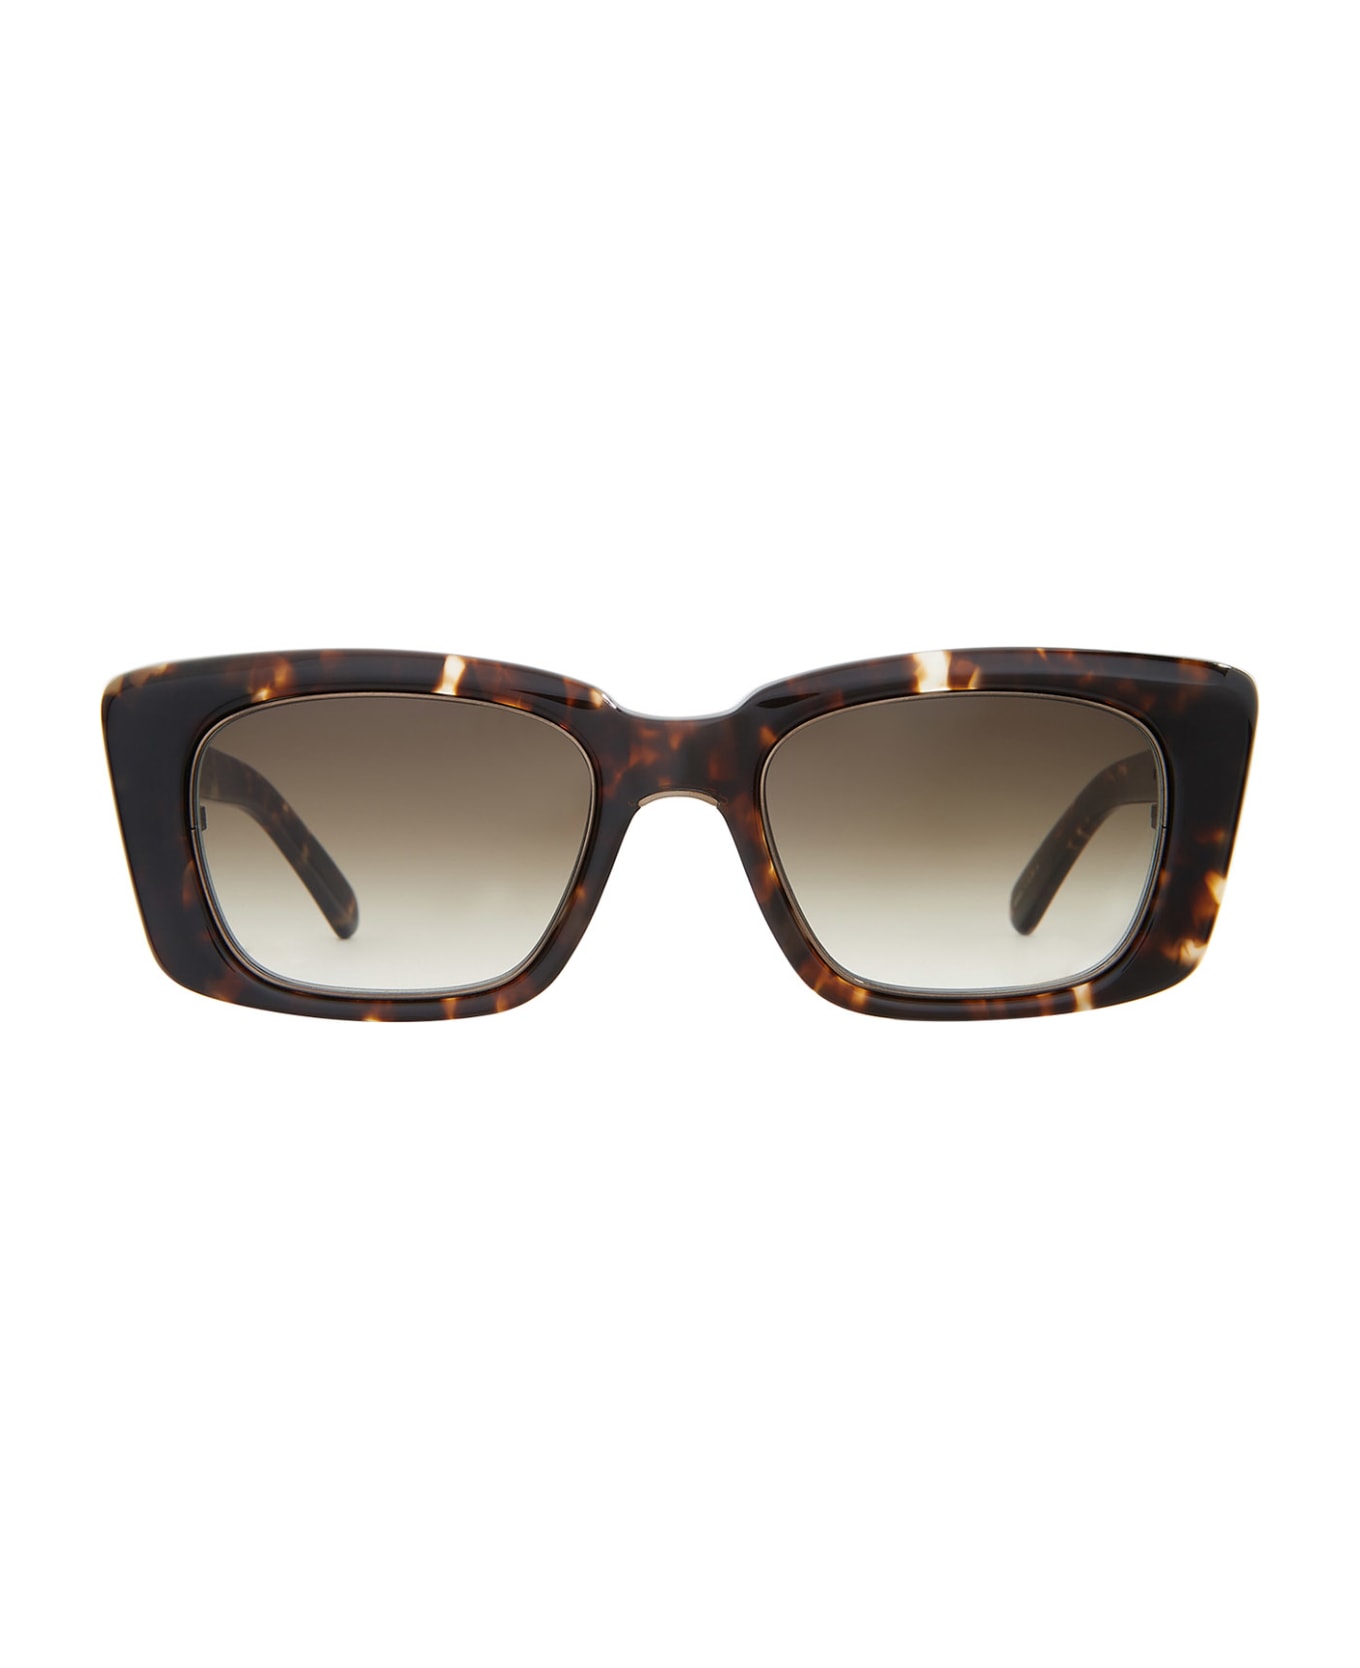 Mr. Leight Carman S Leopard Tortoise Sunglasses - Leopard Tortoise